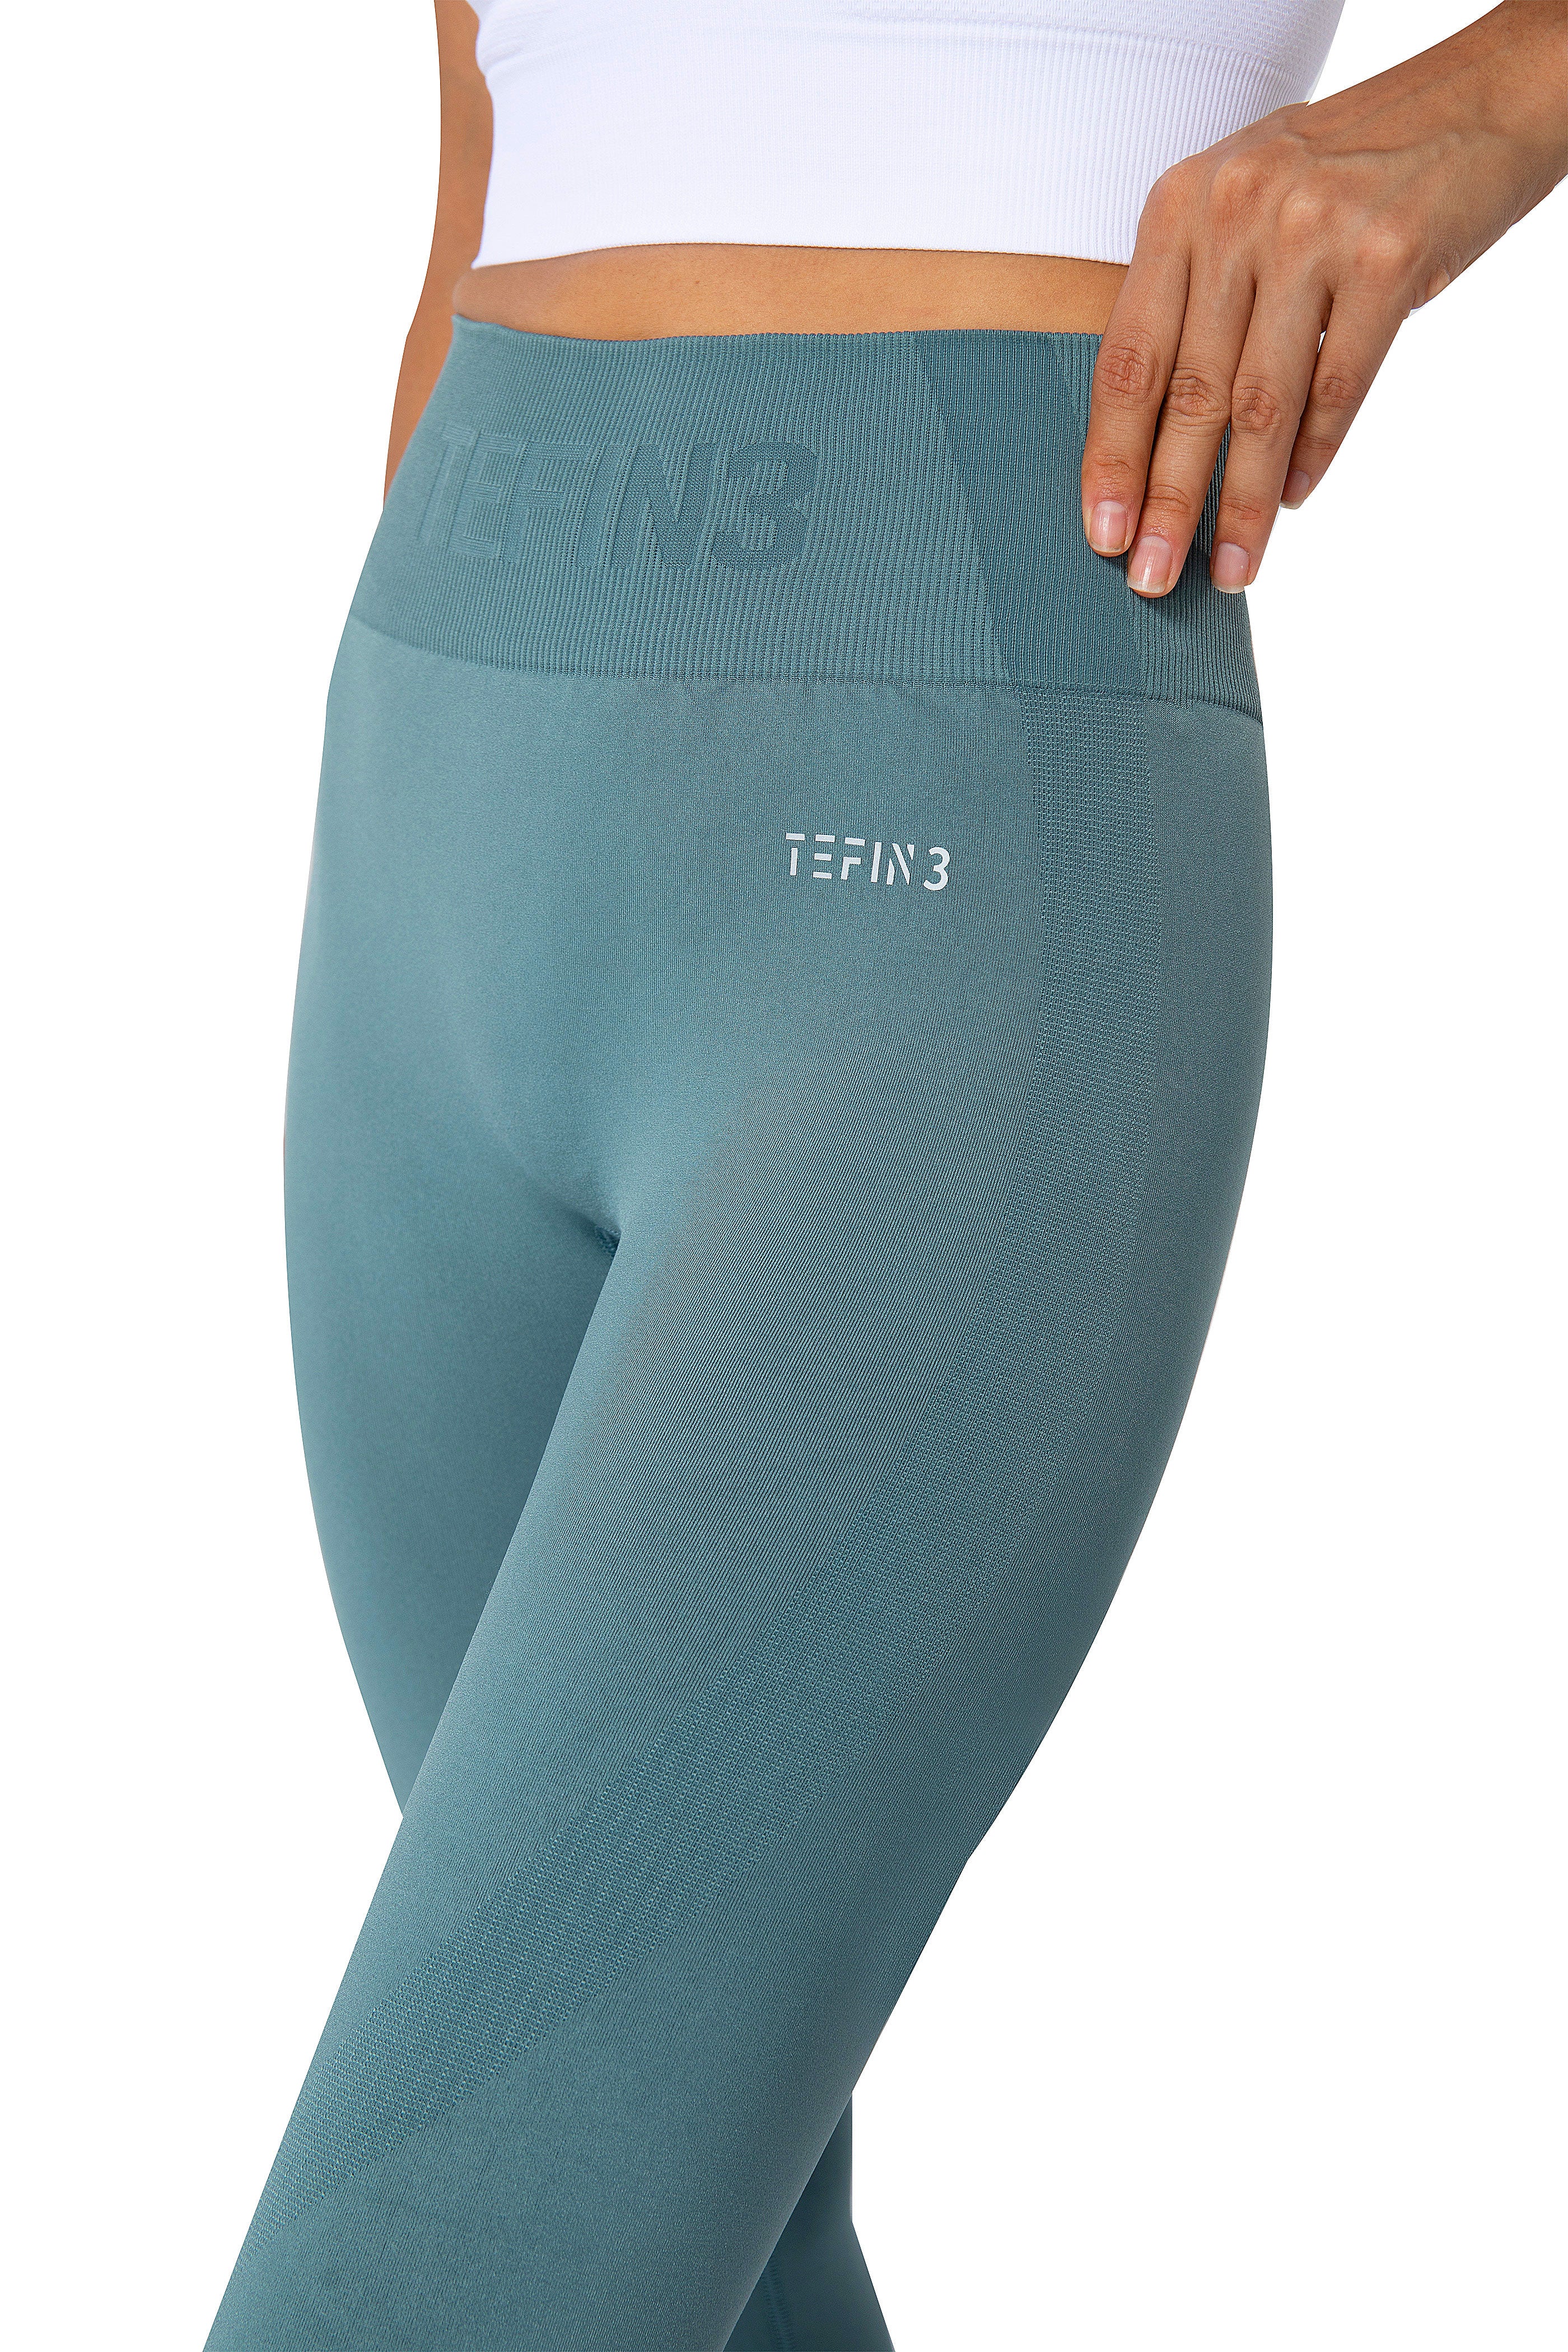 Plain Cotton Ladies Leggings (Pink) XL SEPX9037 in Dandeli at best price by  Sai Enterprises - Justdial